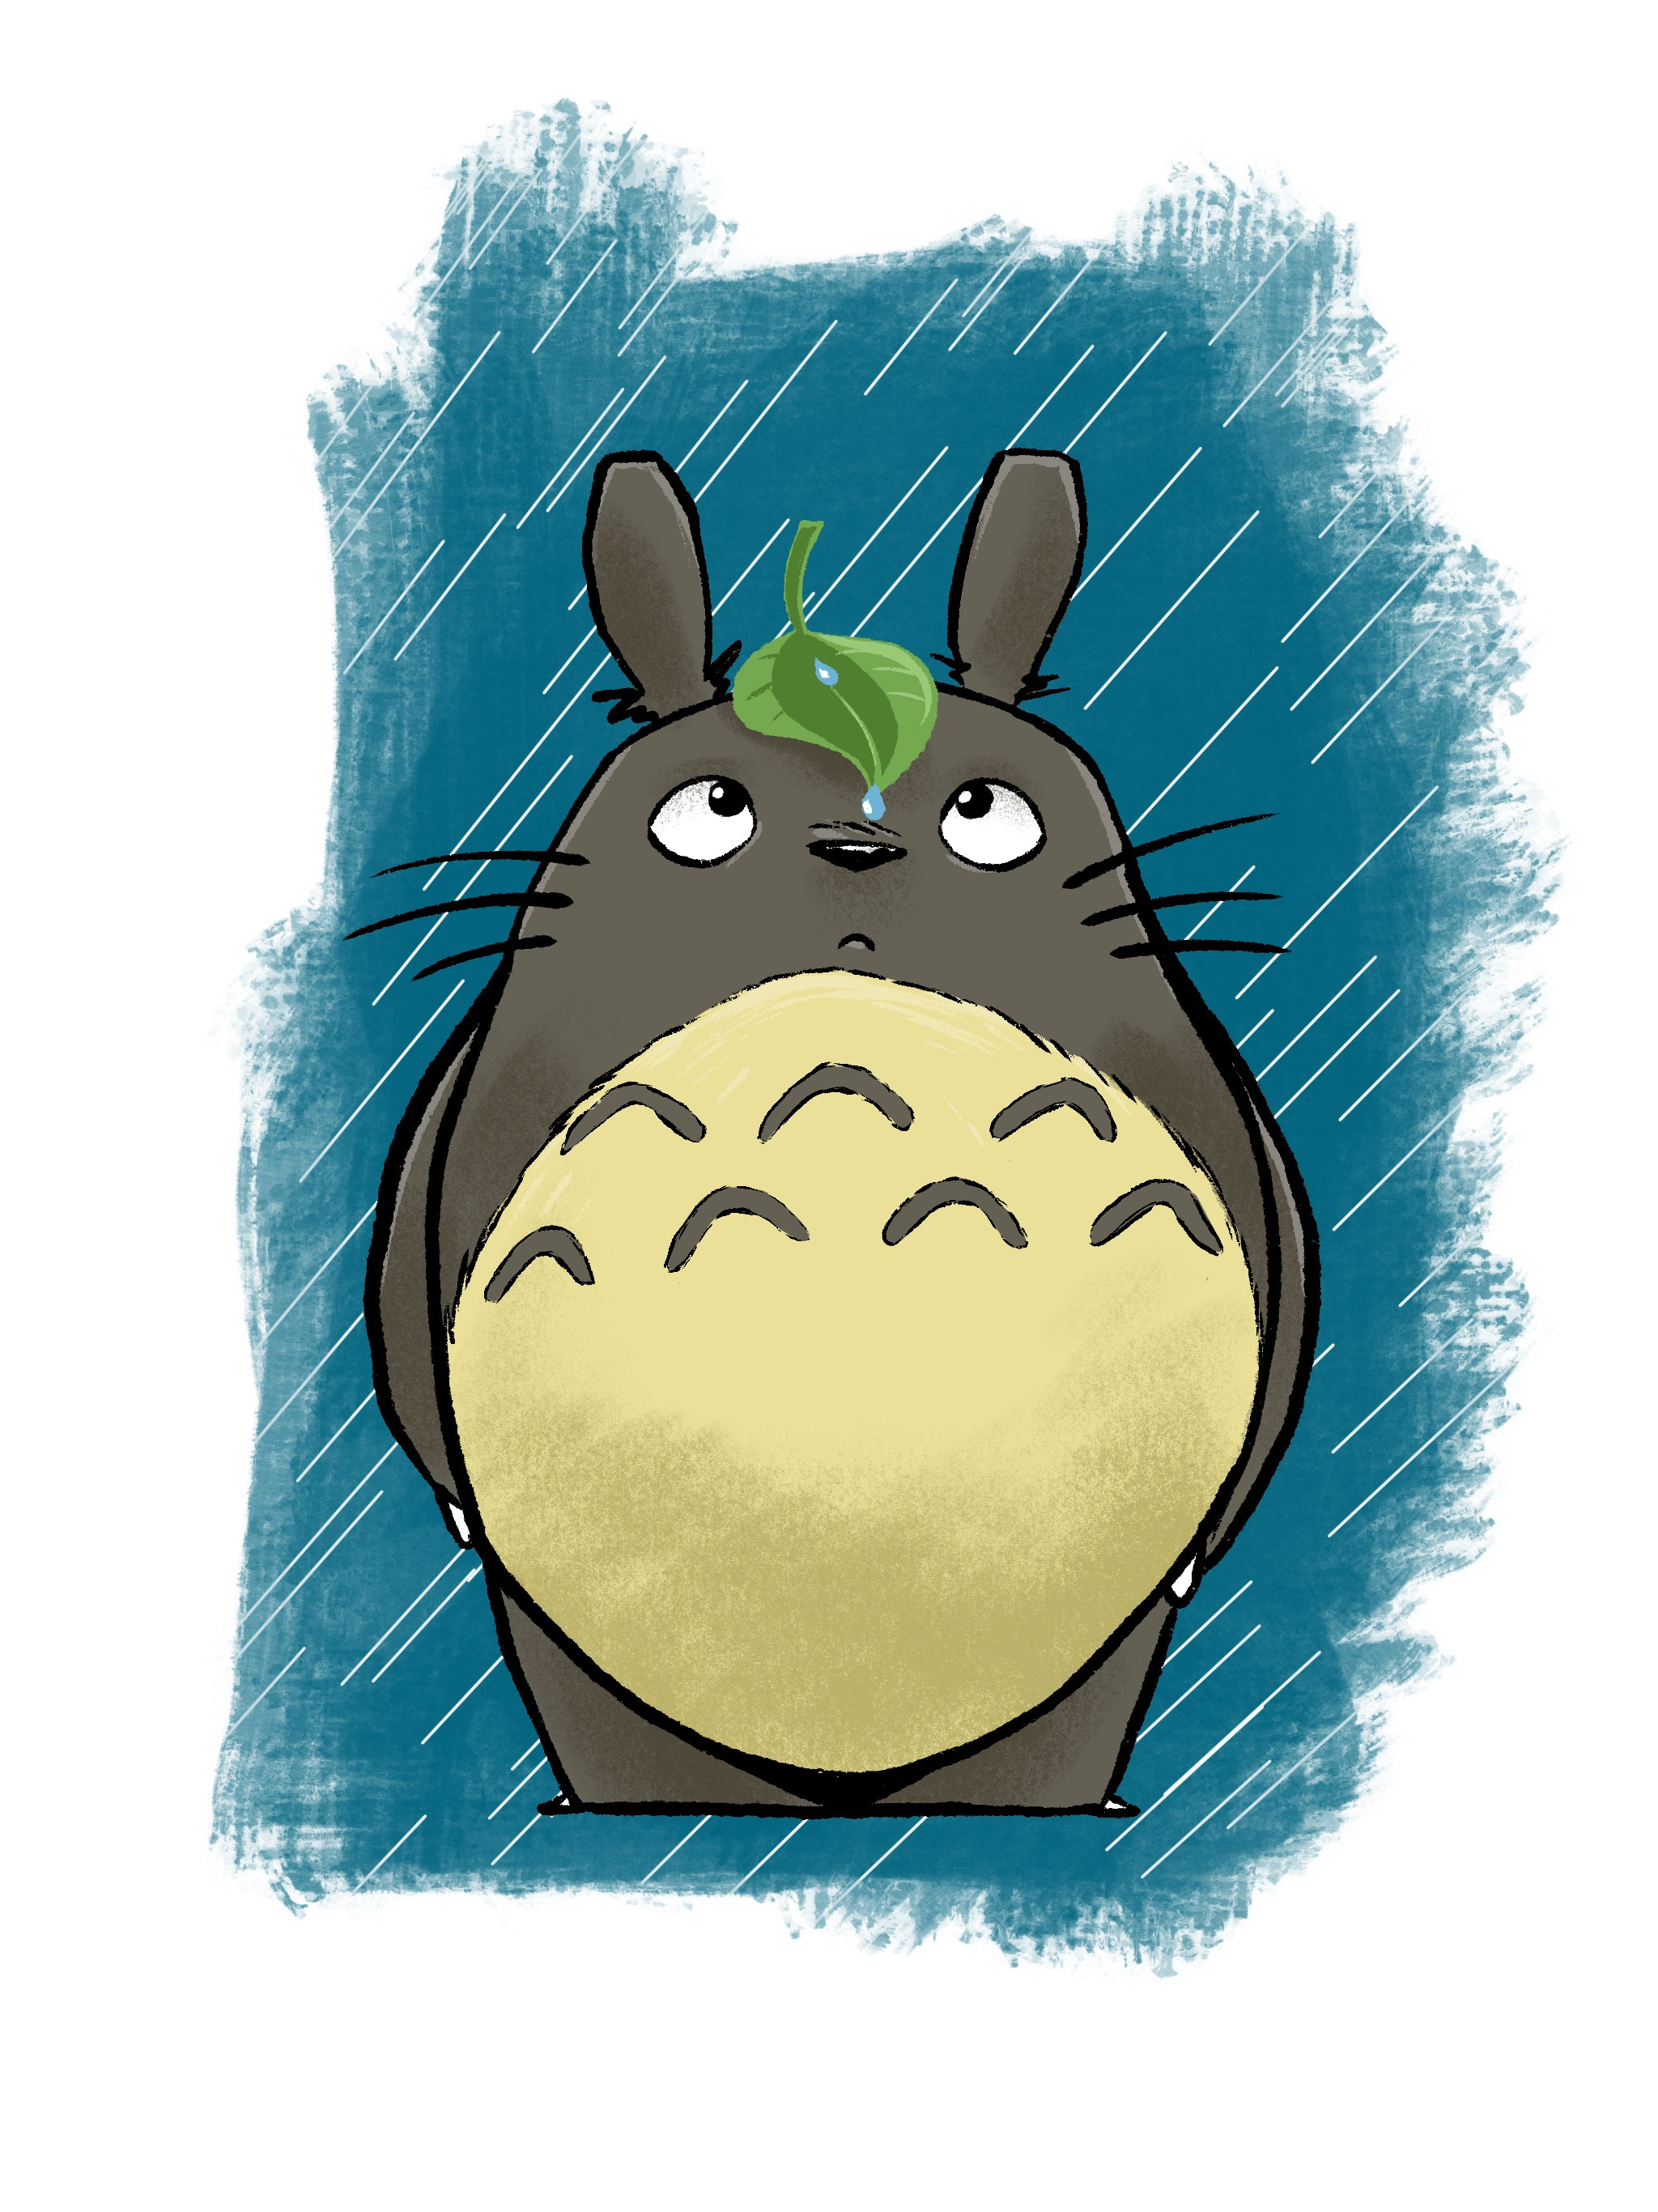 Totoro - Digital in Procreate